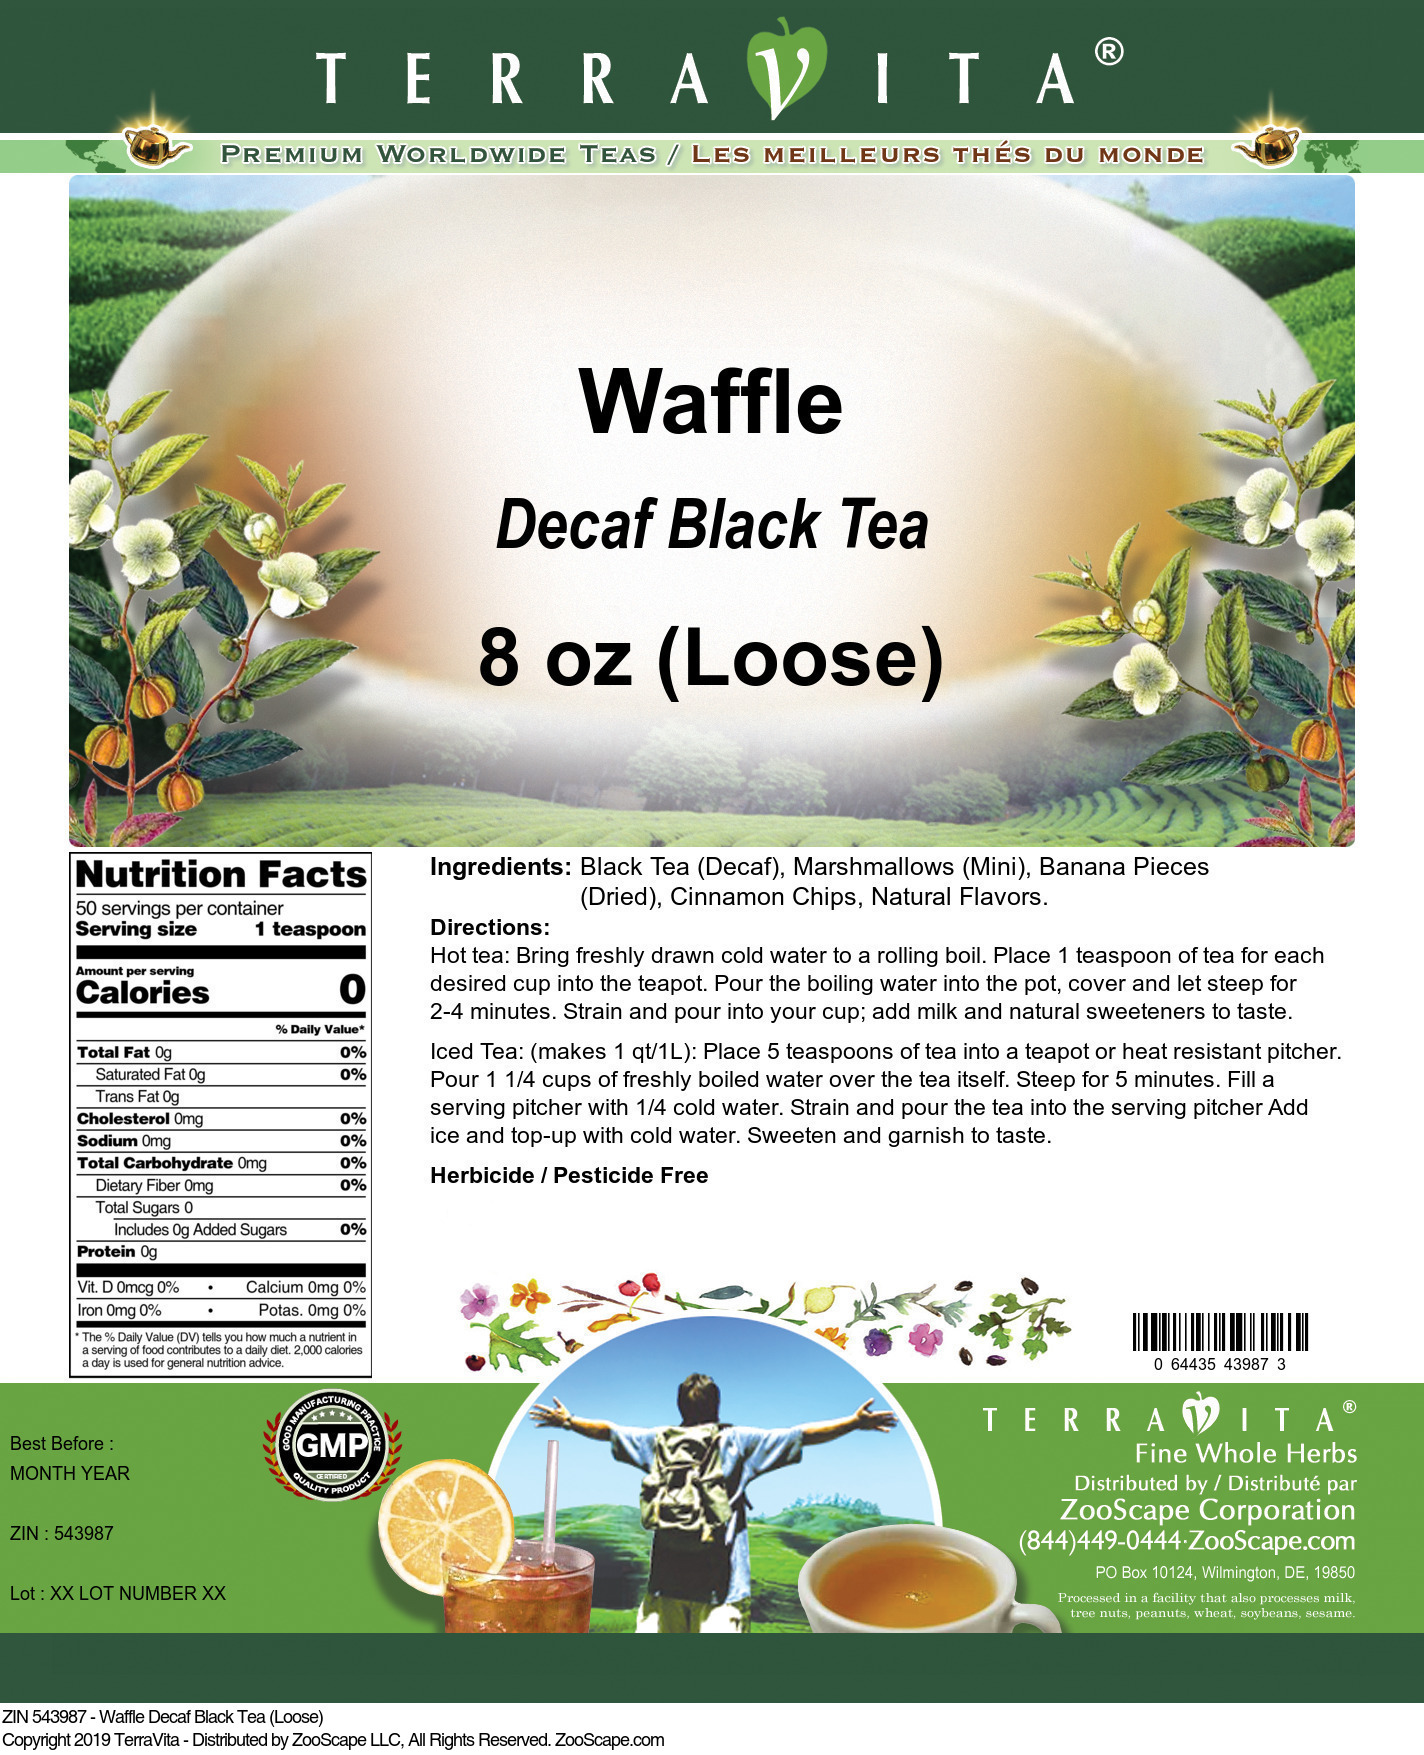 Waffle Decaf Black Tea (Loose) - Label